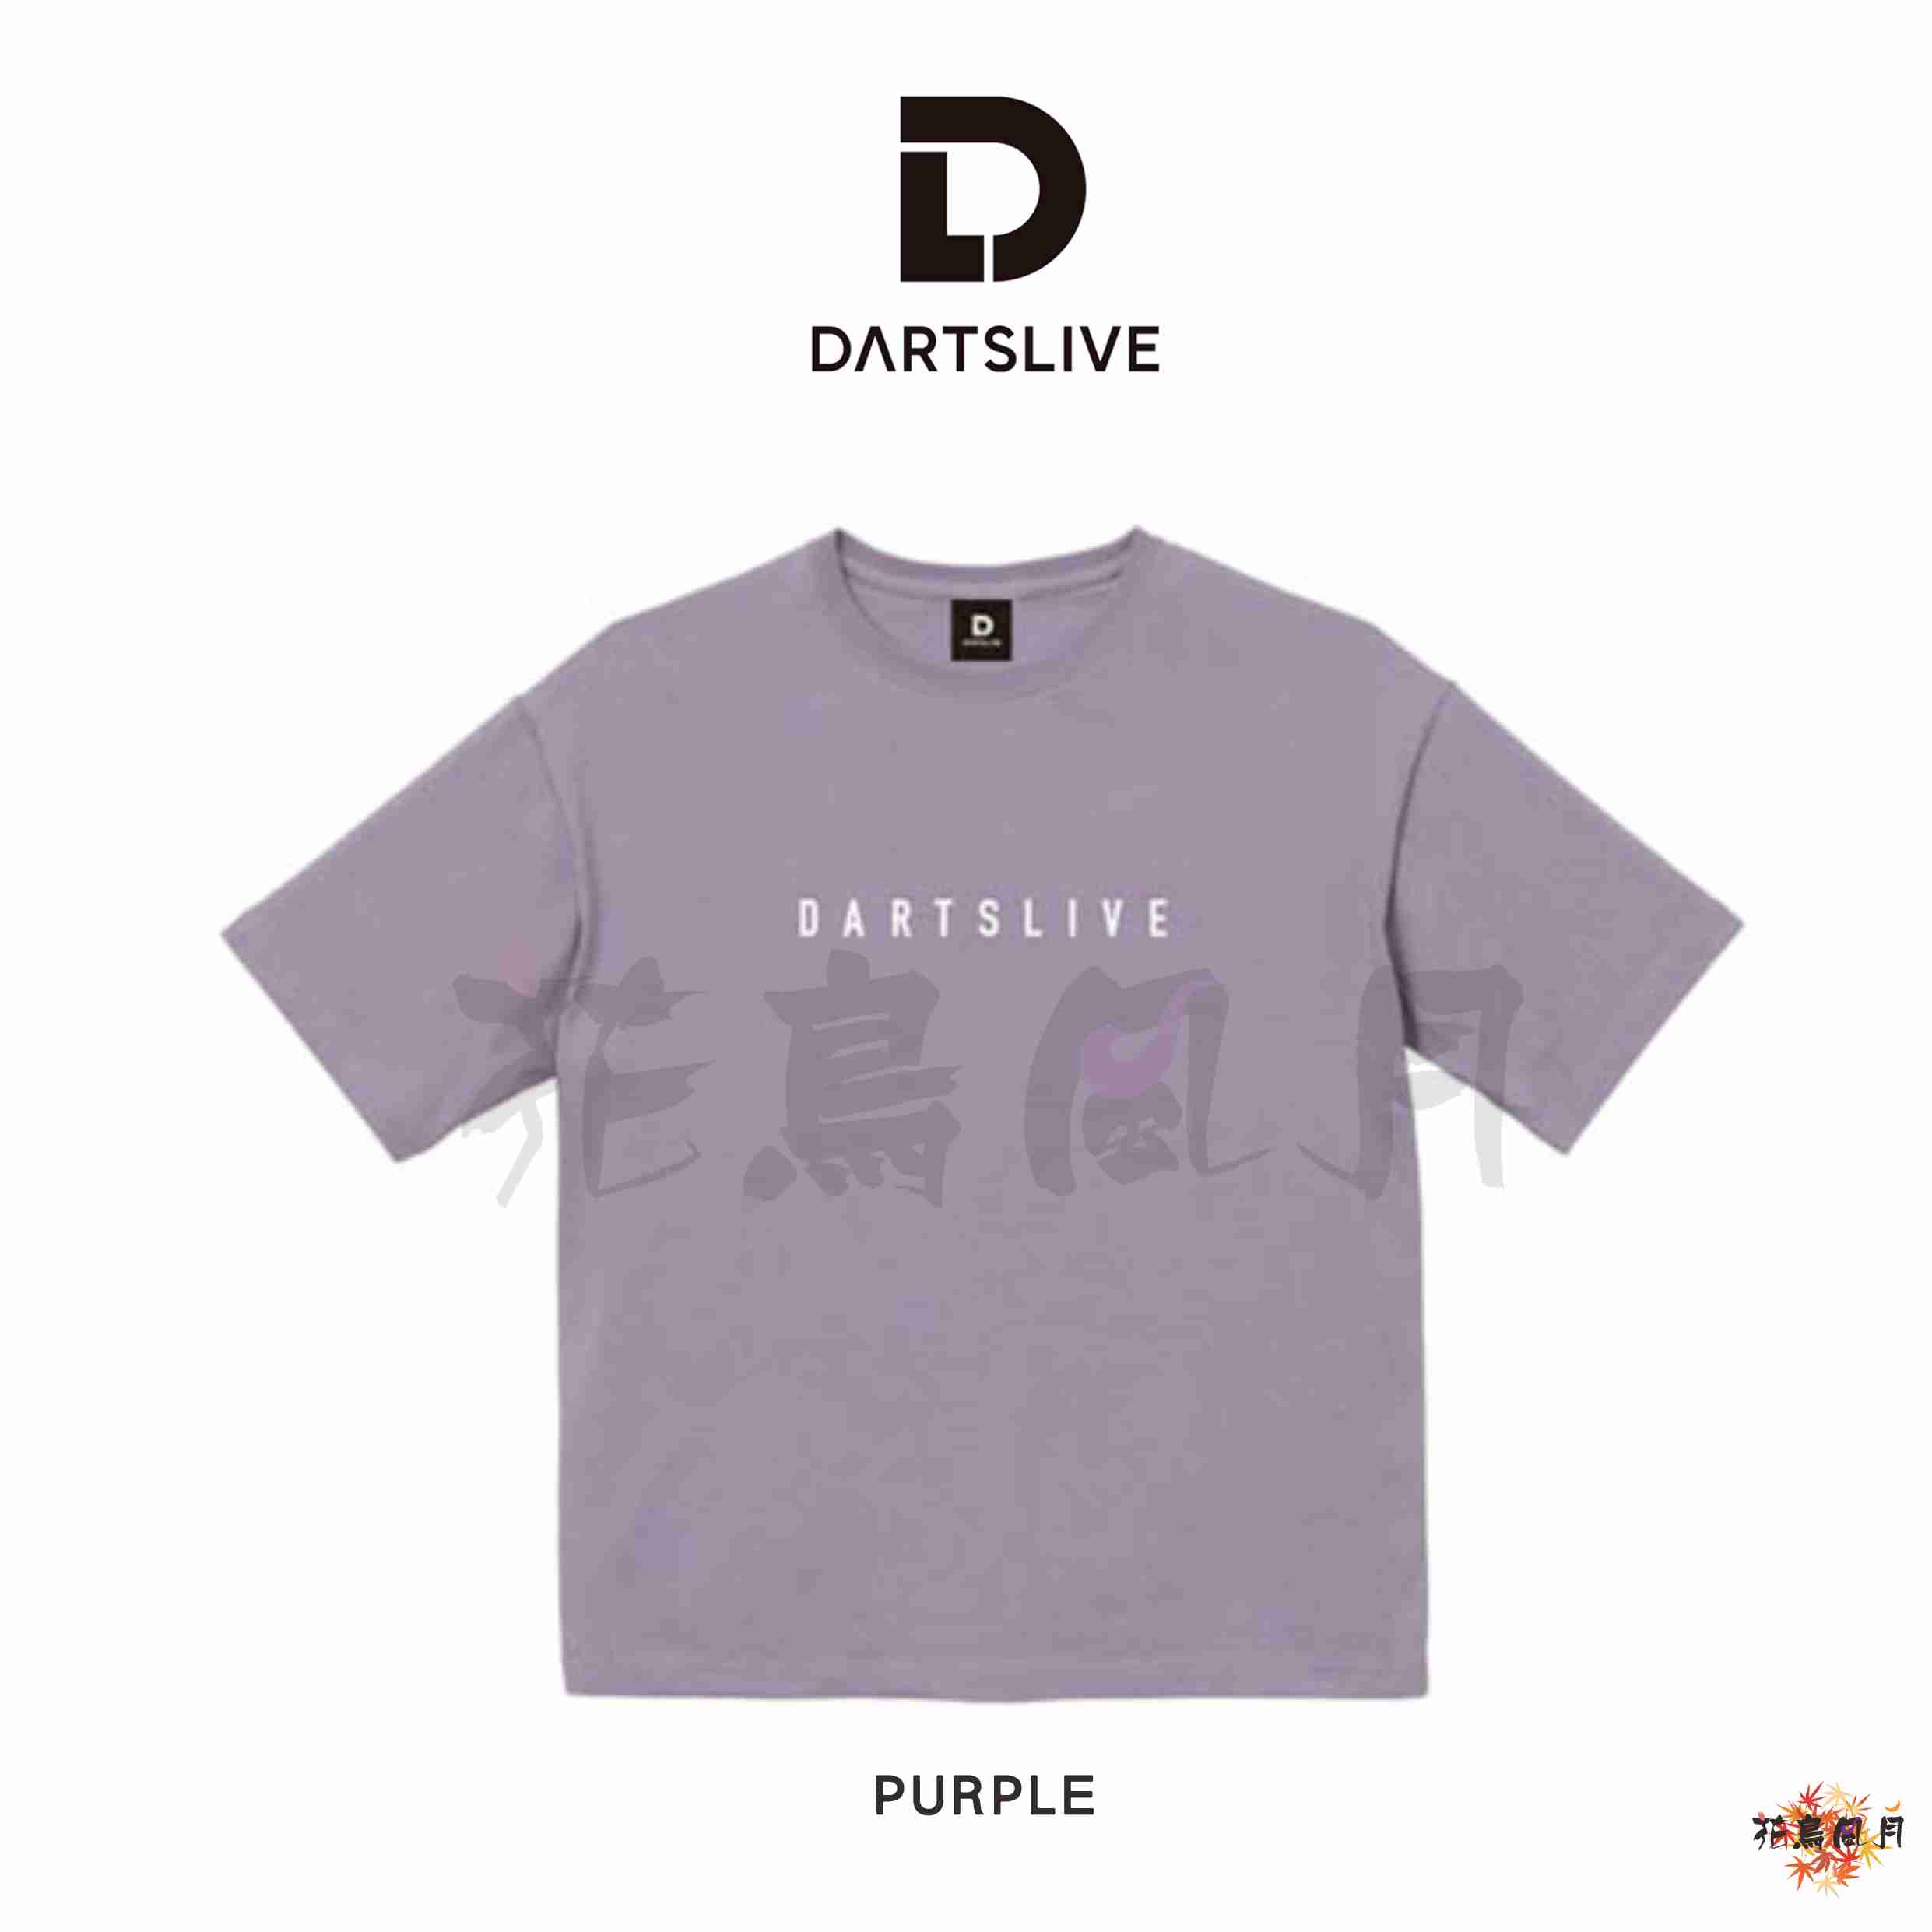 DARTSLIVE-Tshirt